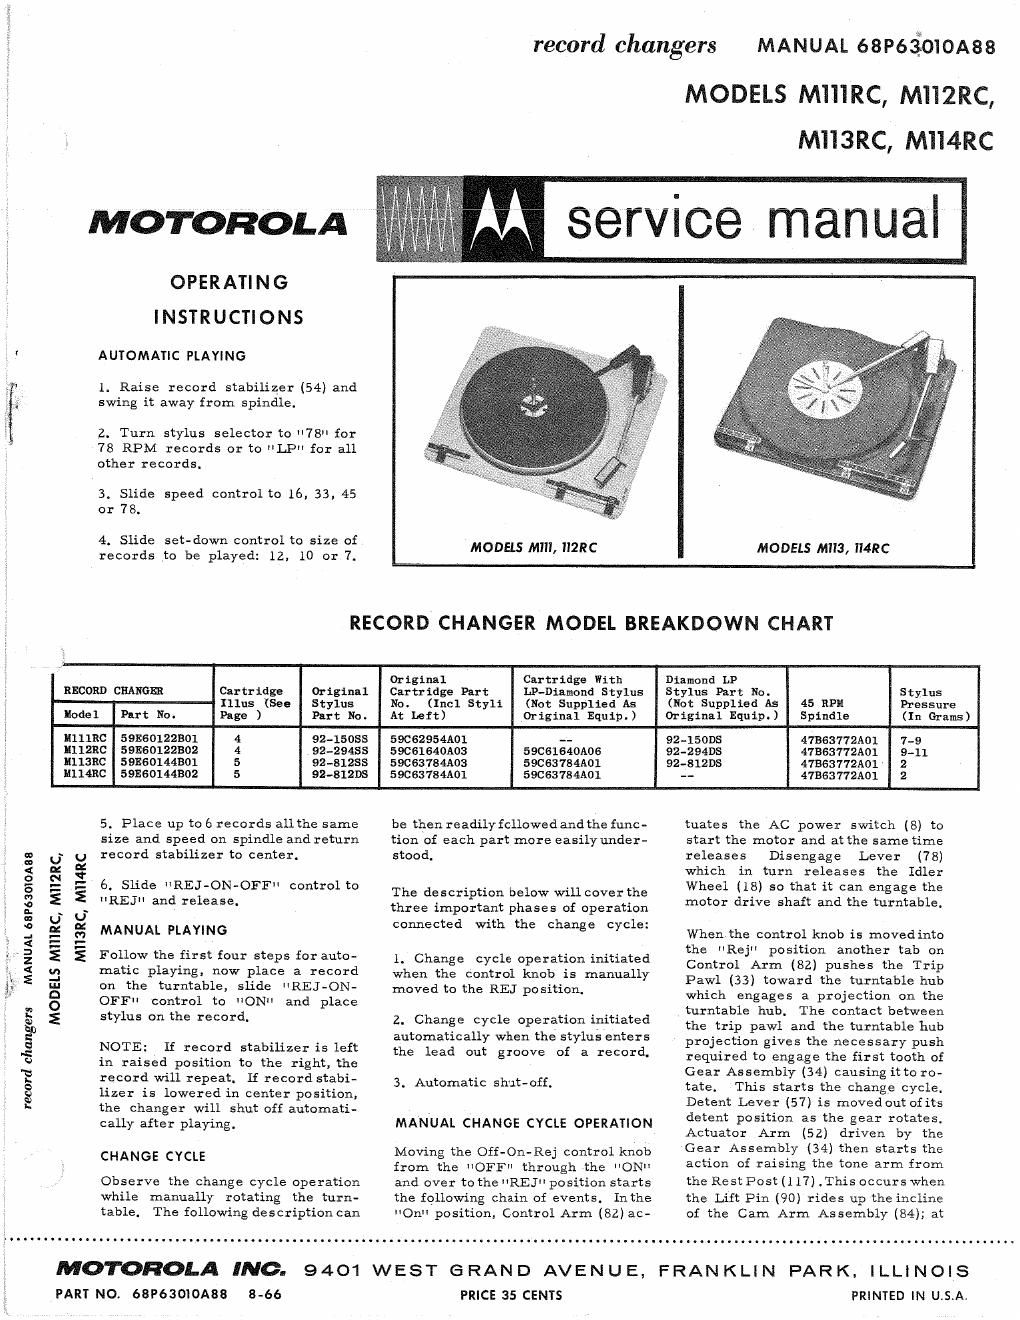 motorola m 111 rc service manual